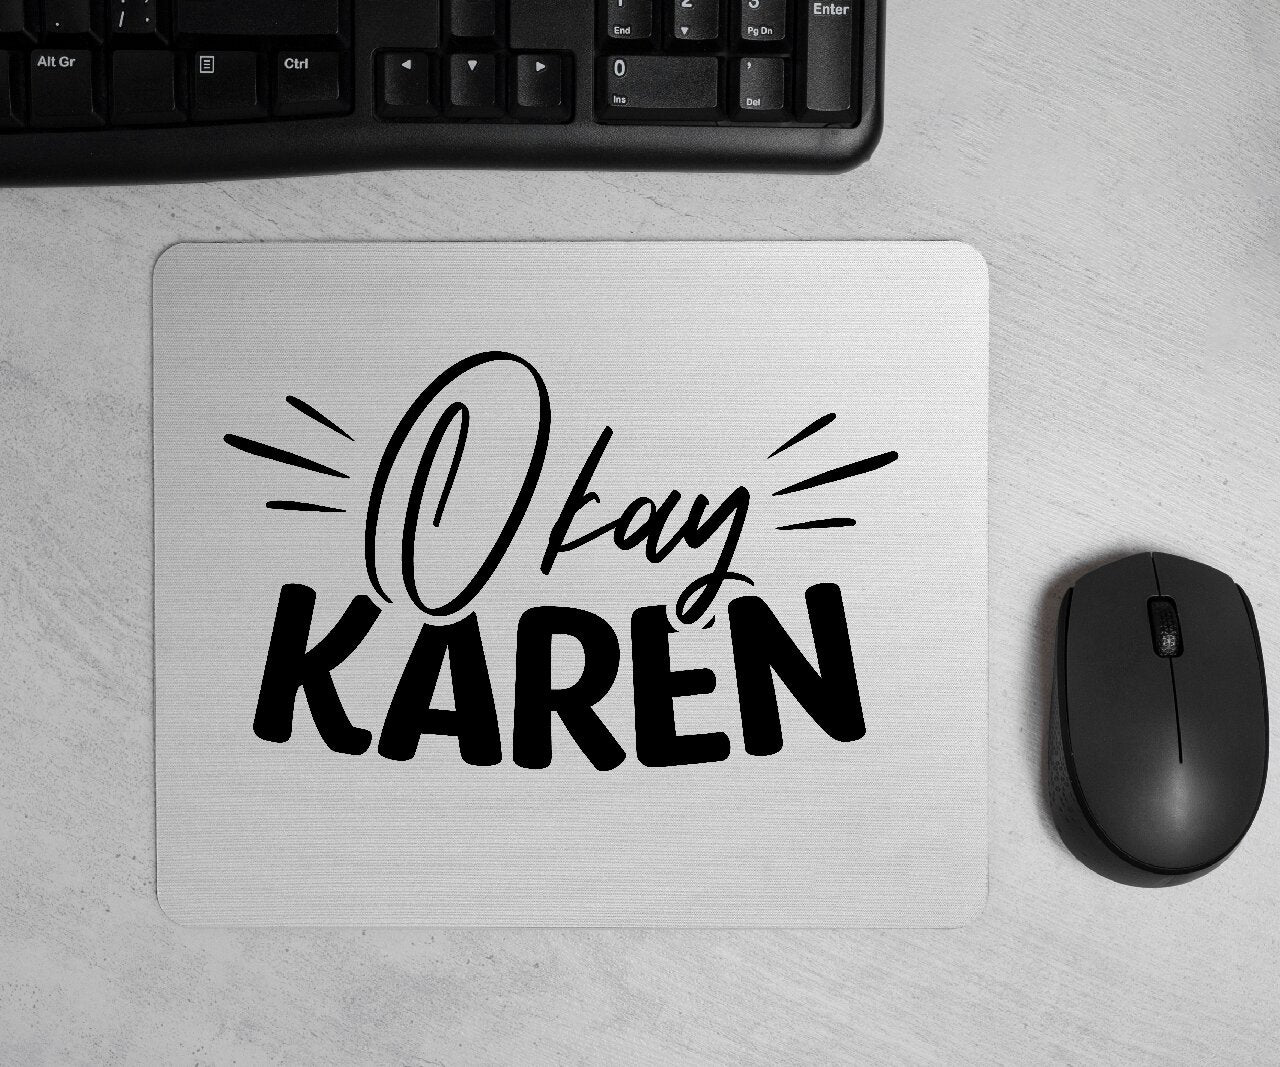 Okay Karen - Mouse Pad